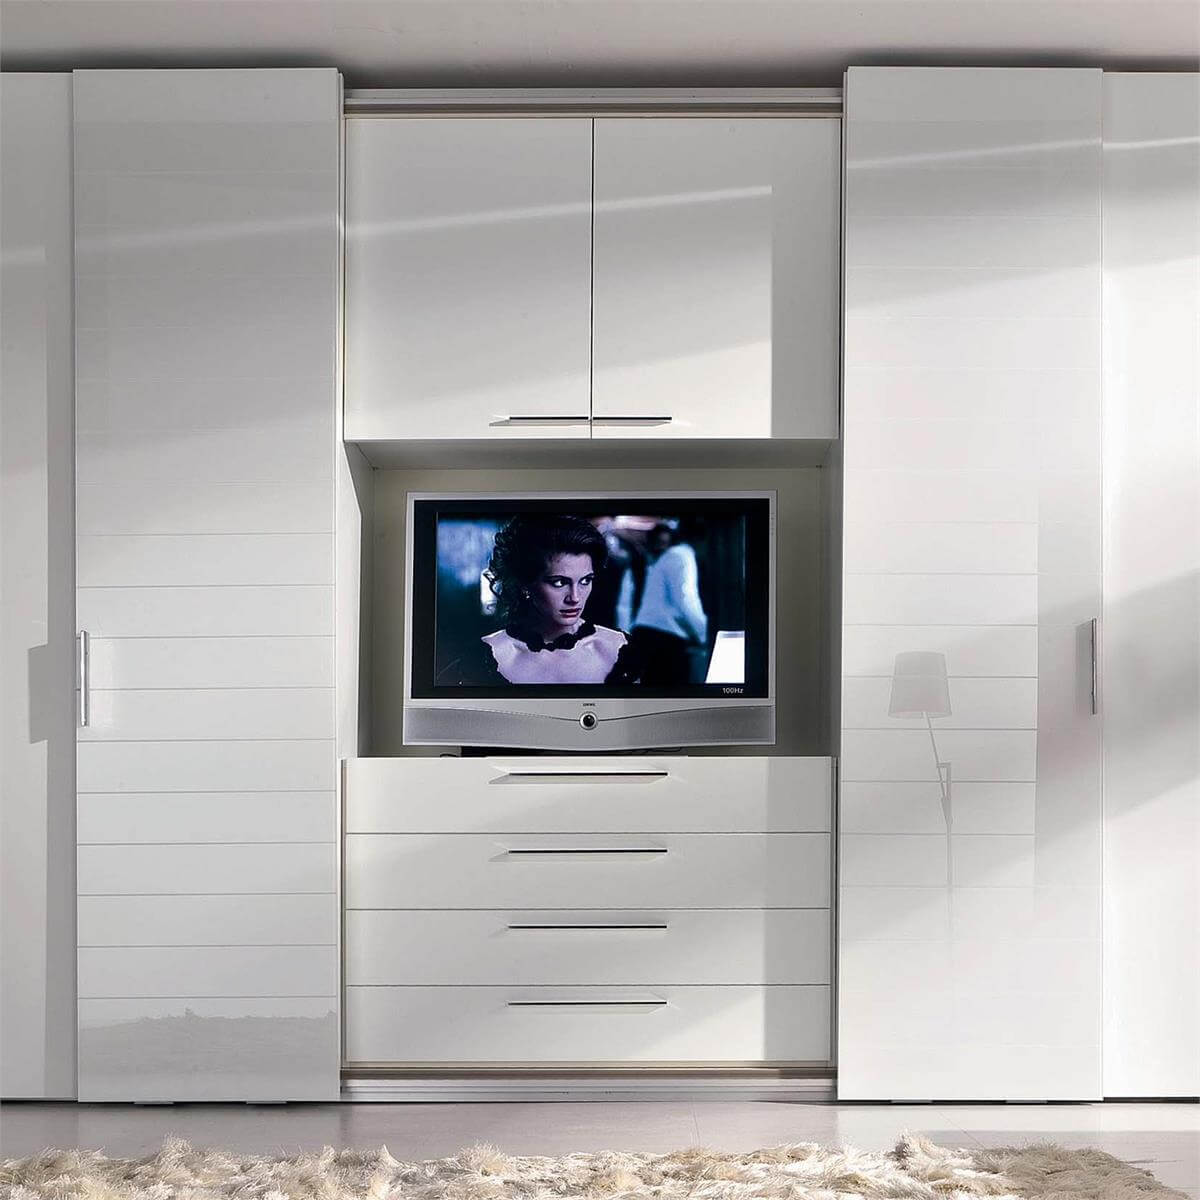 Шкаф для телевизора размеры